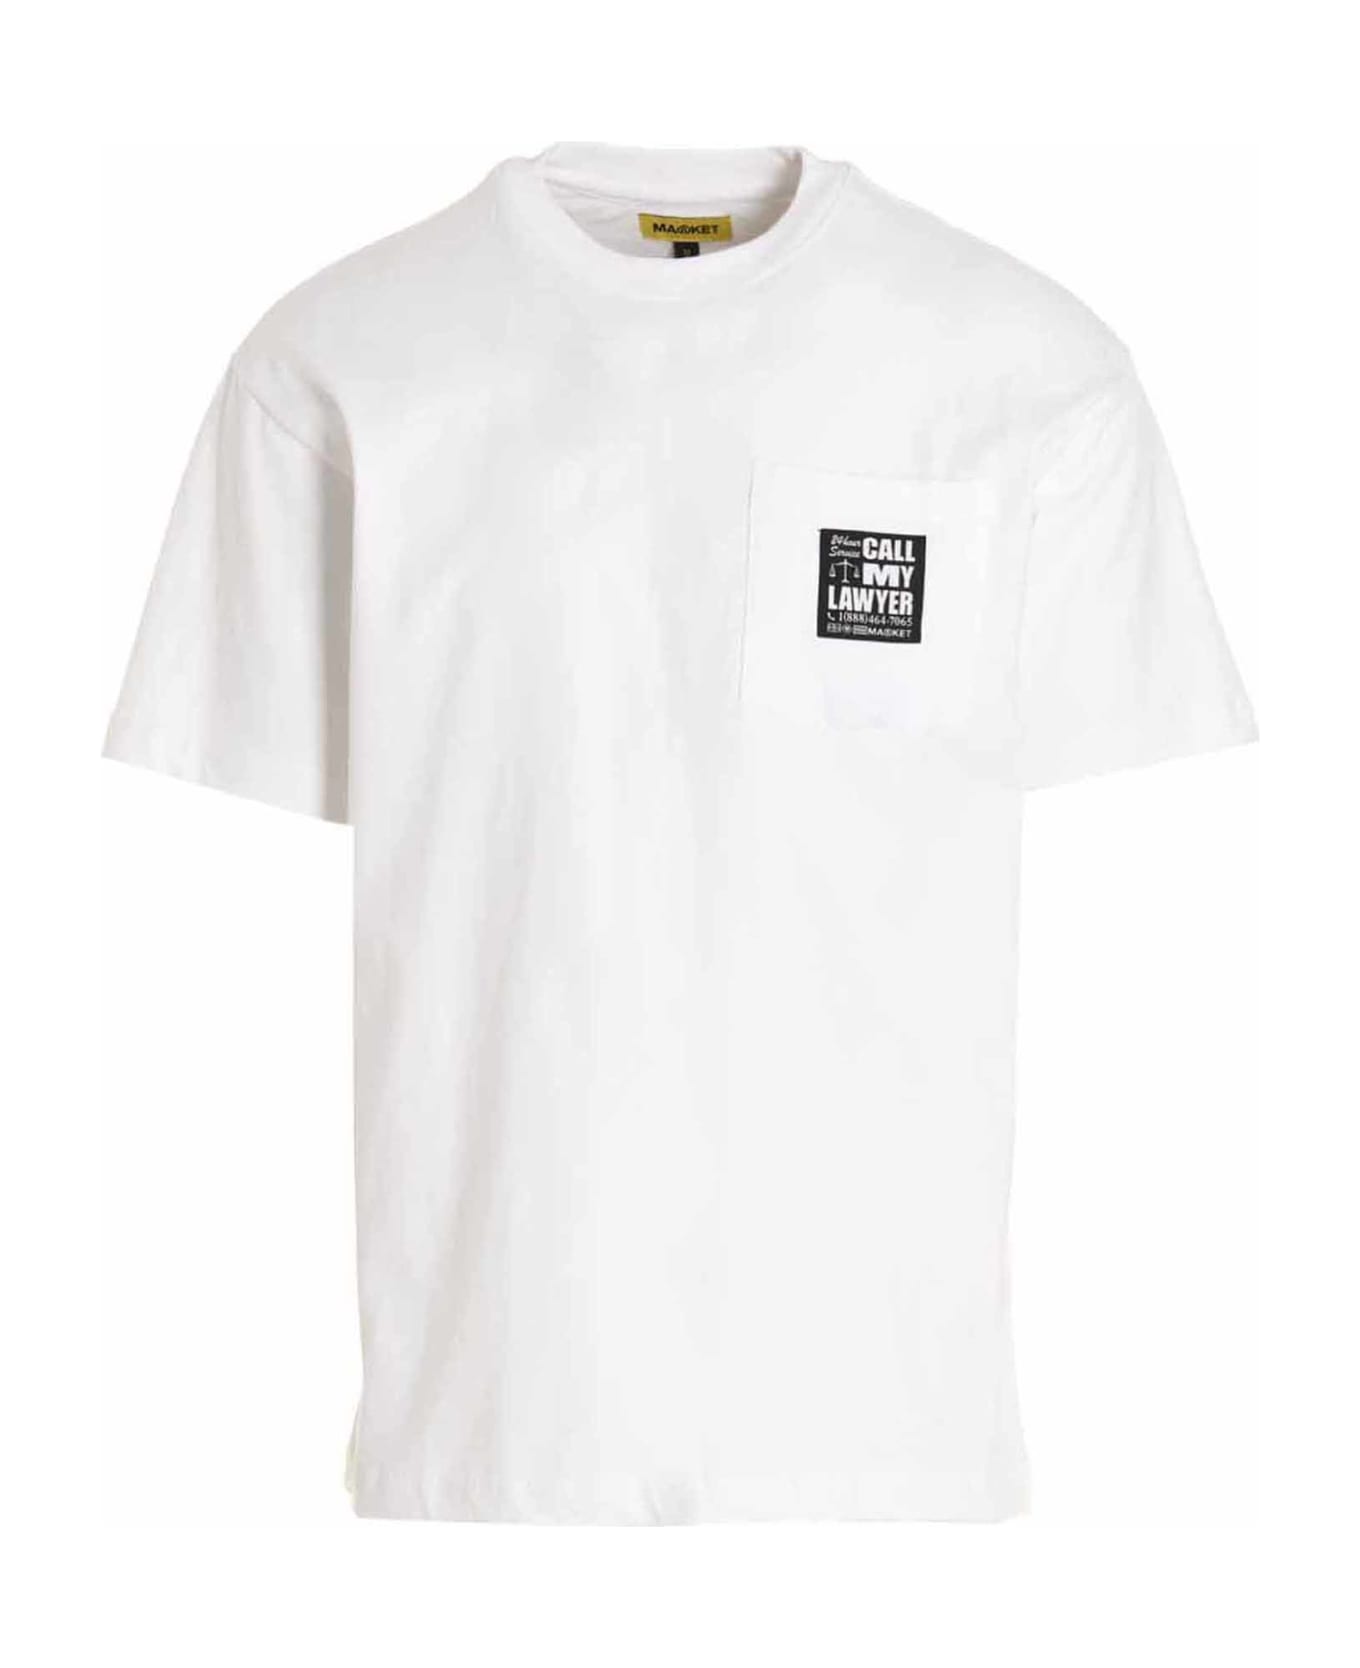 Market T-shirt '24 Hr Lawyer Service' - White/Black